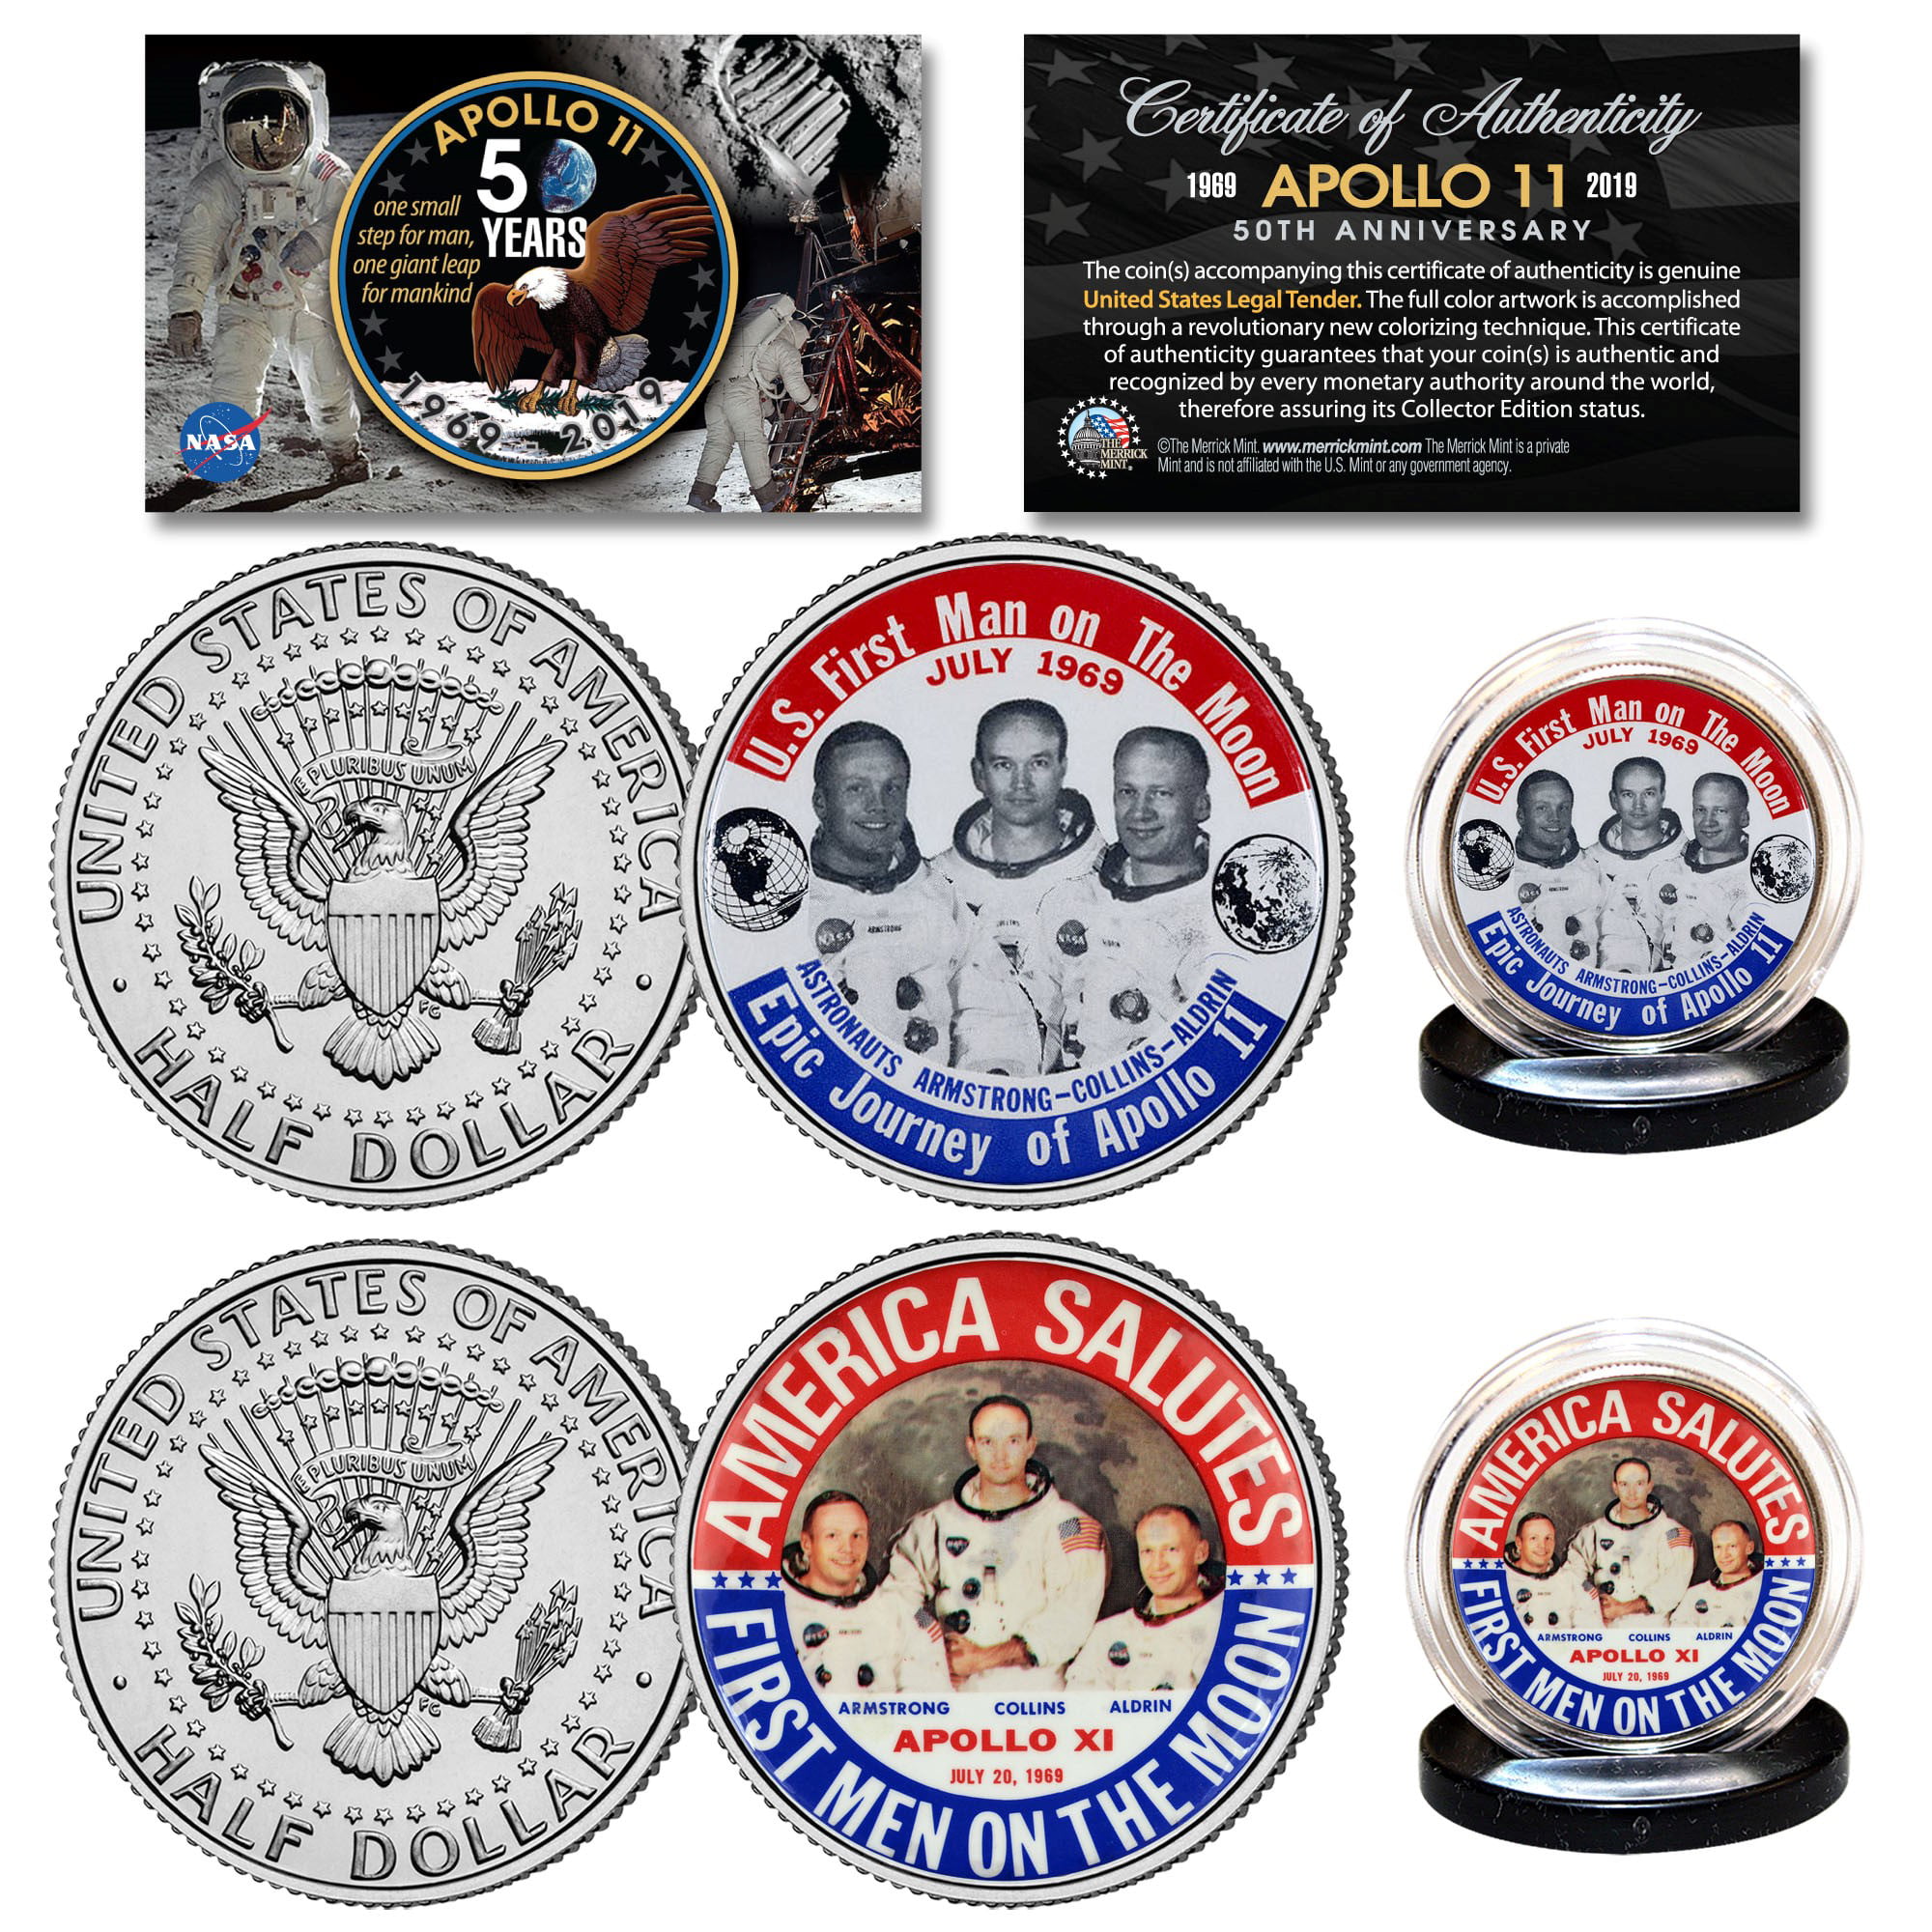 Apollo 11 Moon-landing Challenge Coin 